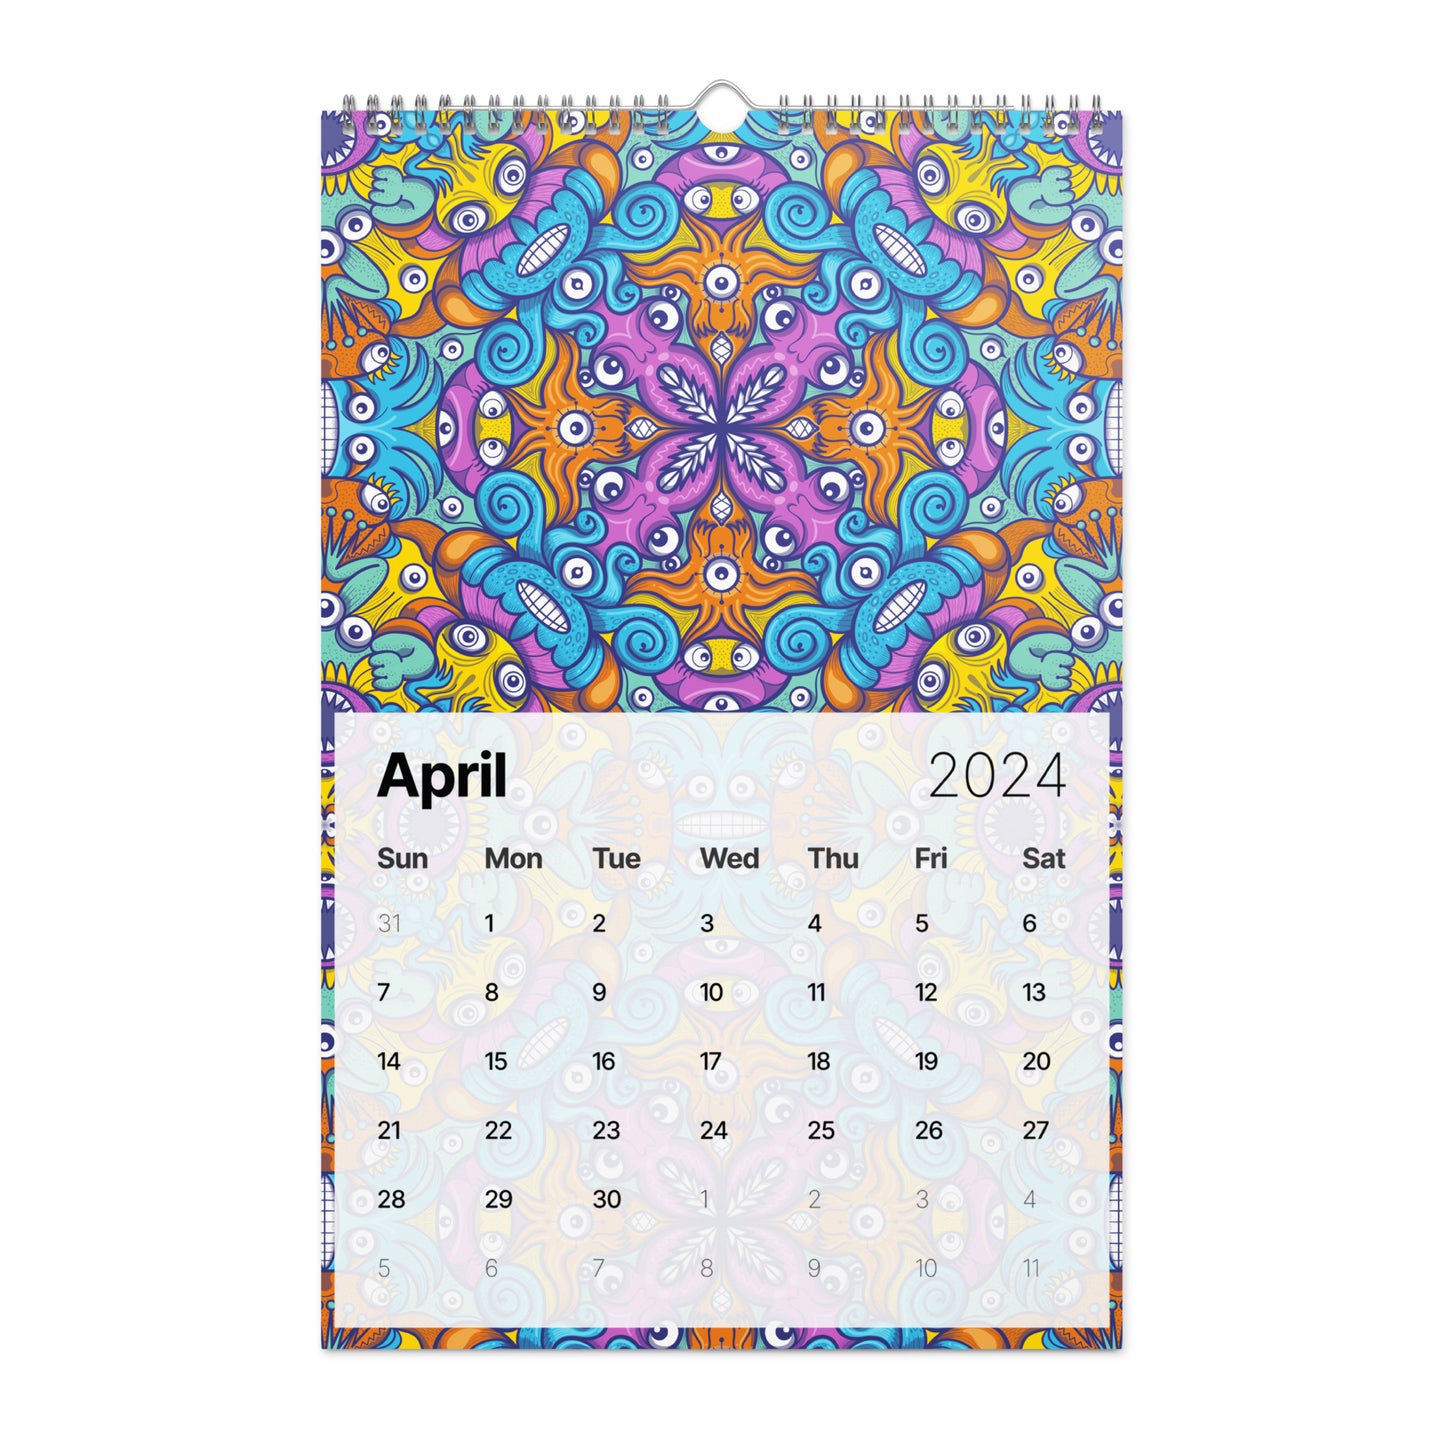 Zoo&co’s Doodle Art Wall calendar (2024). 11 x 17. April